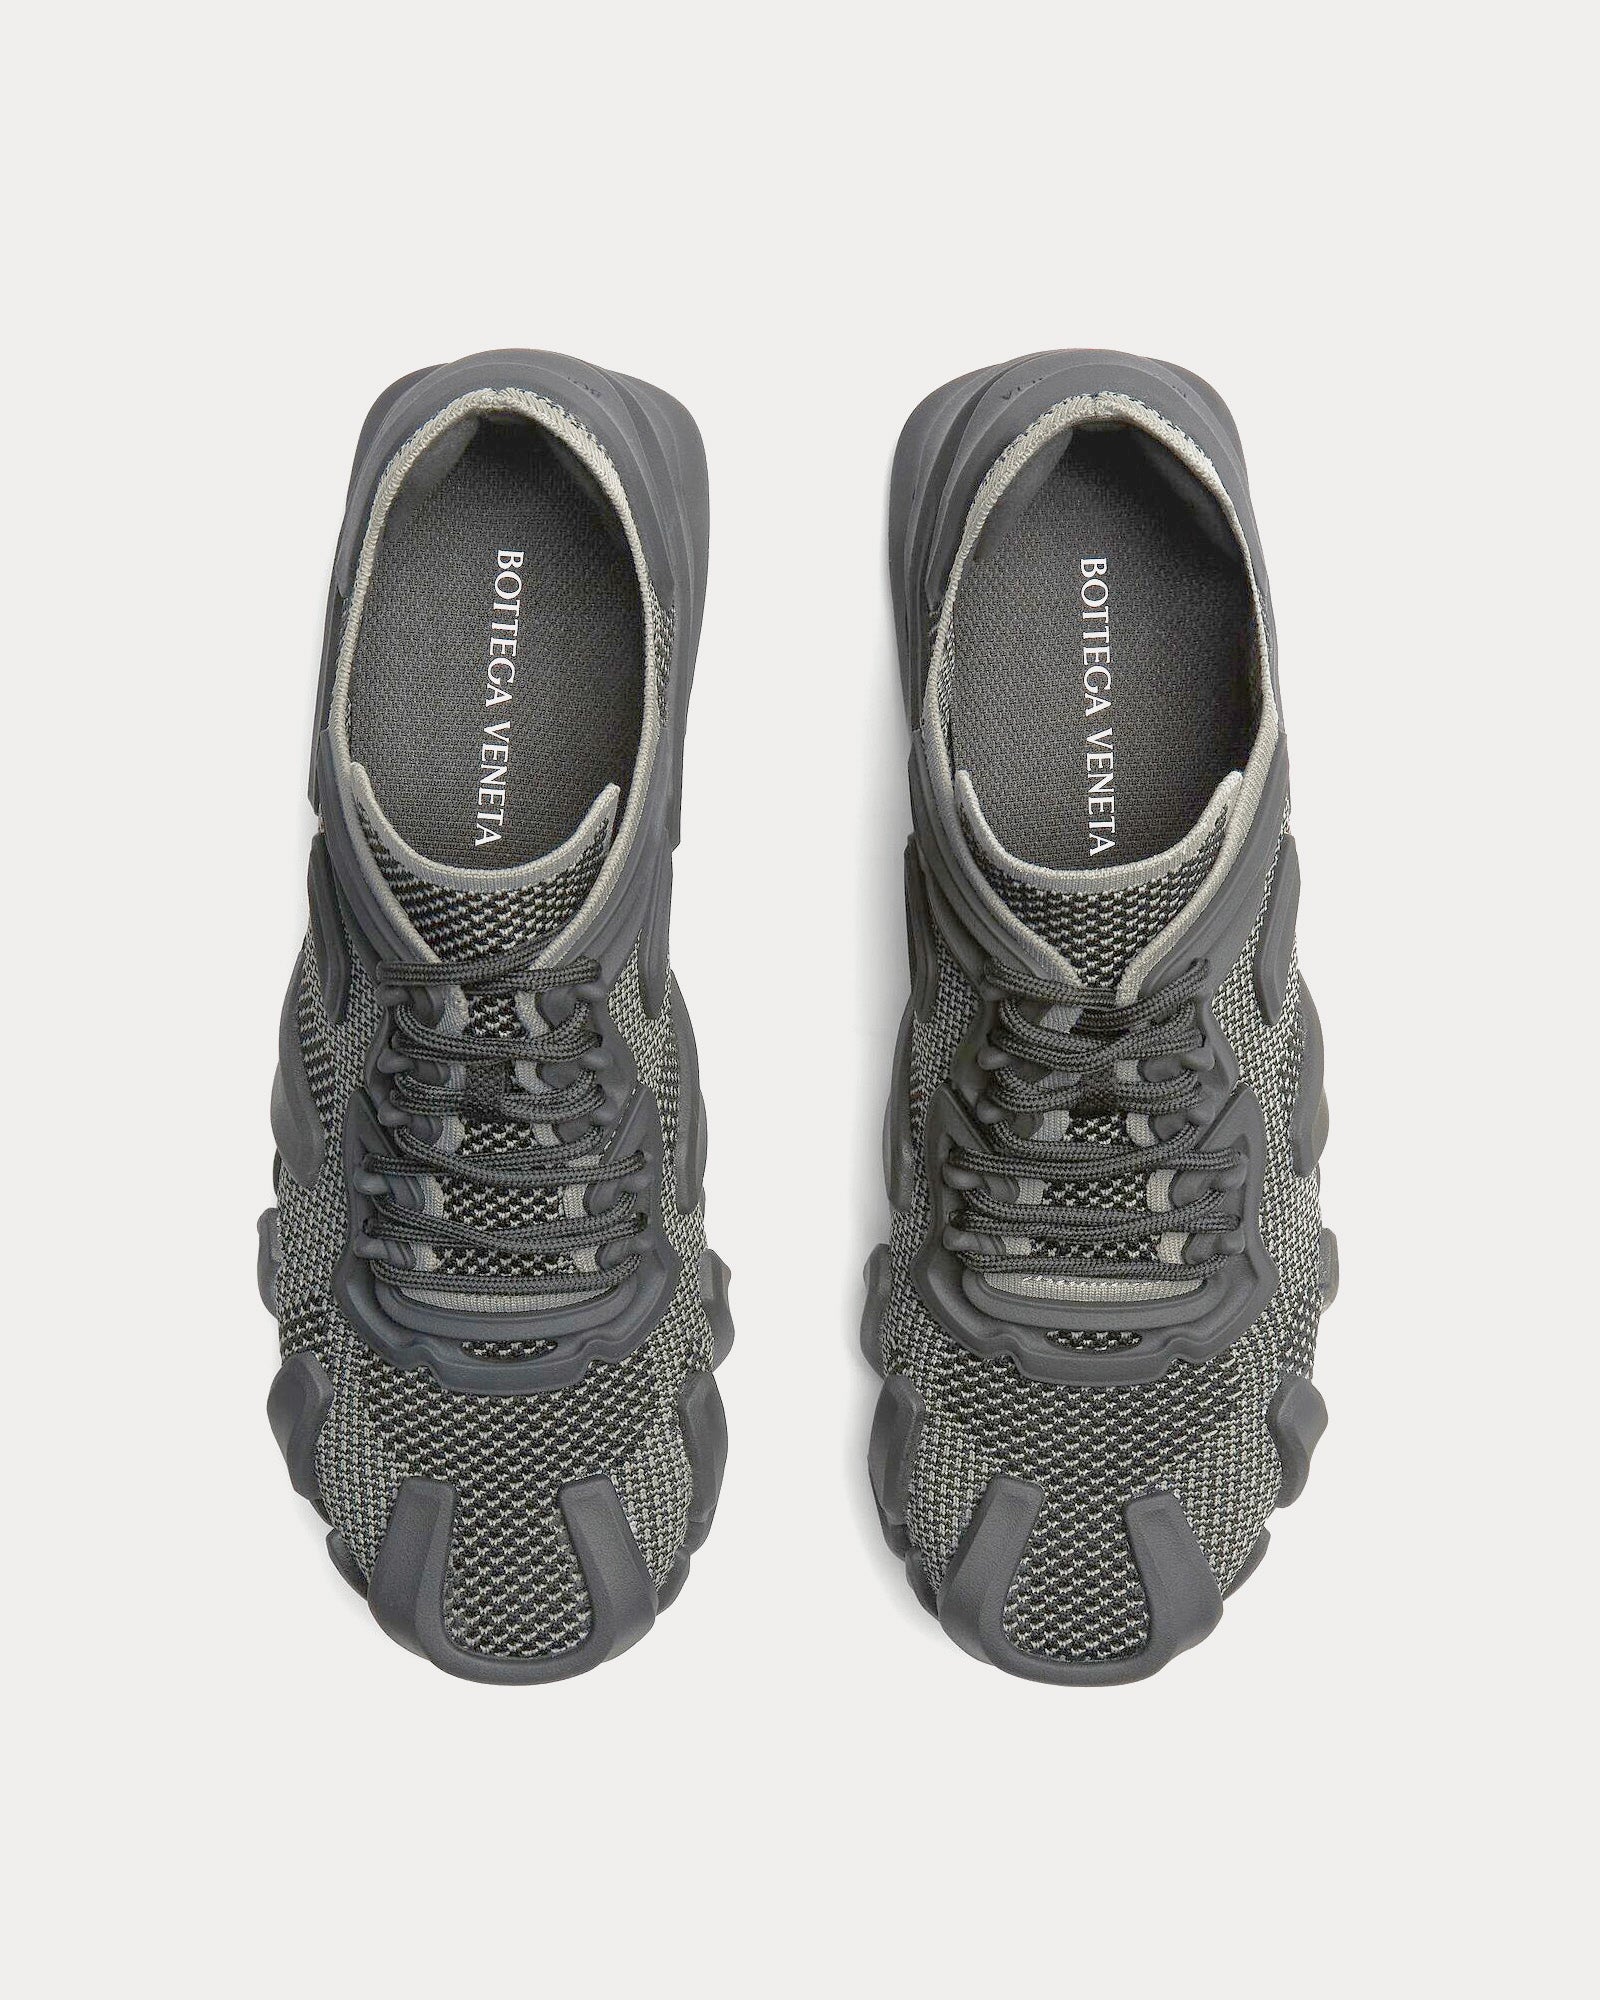 Bottega Veneta - Flex Technical Knit Grey Low Top Sneakers